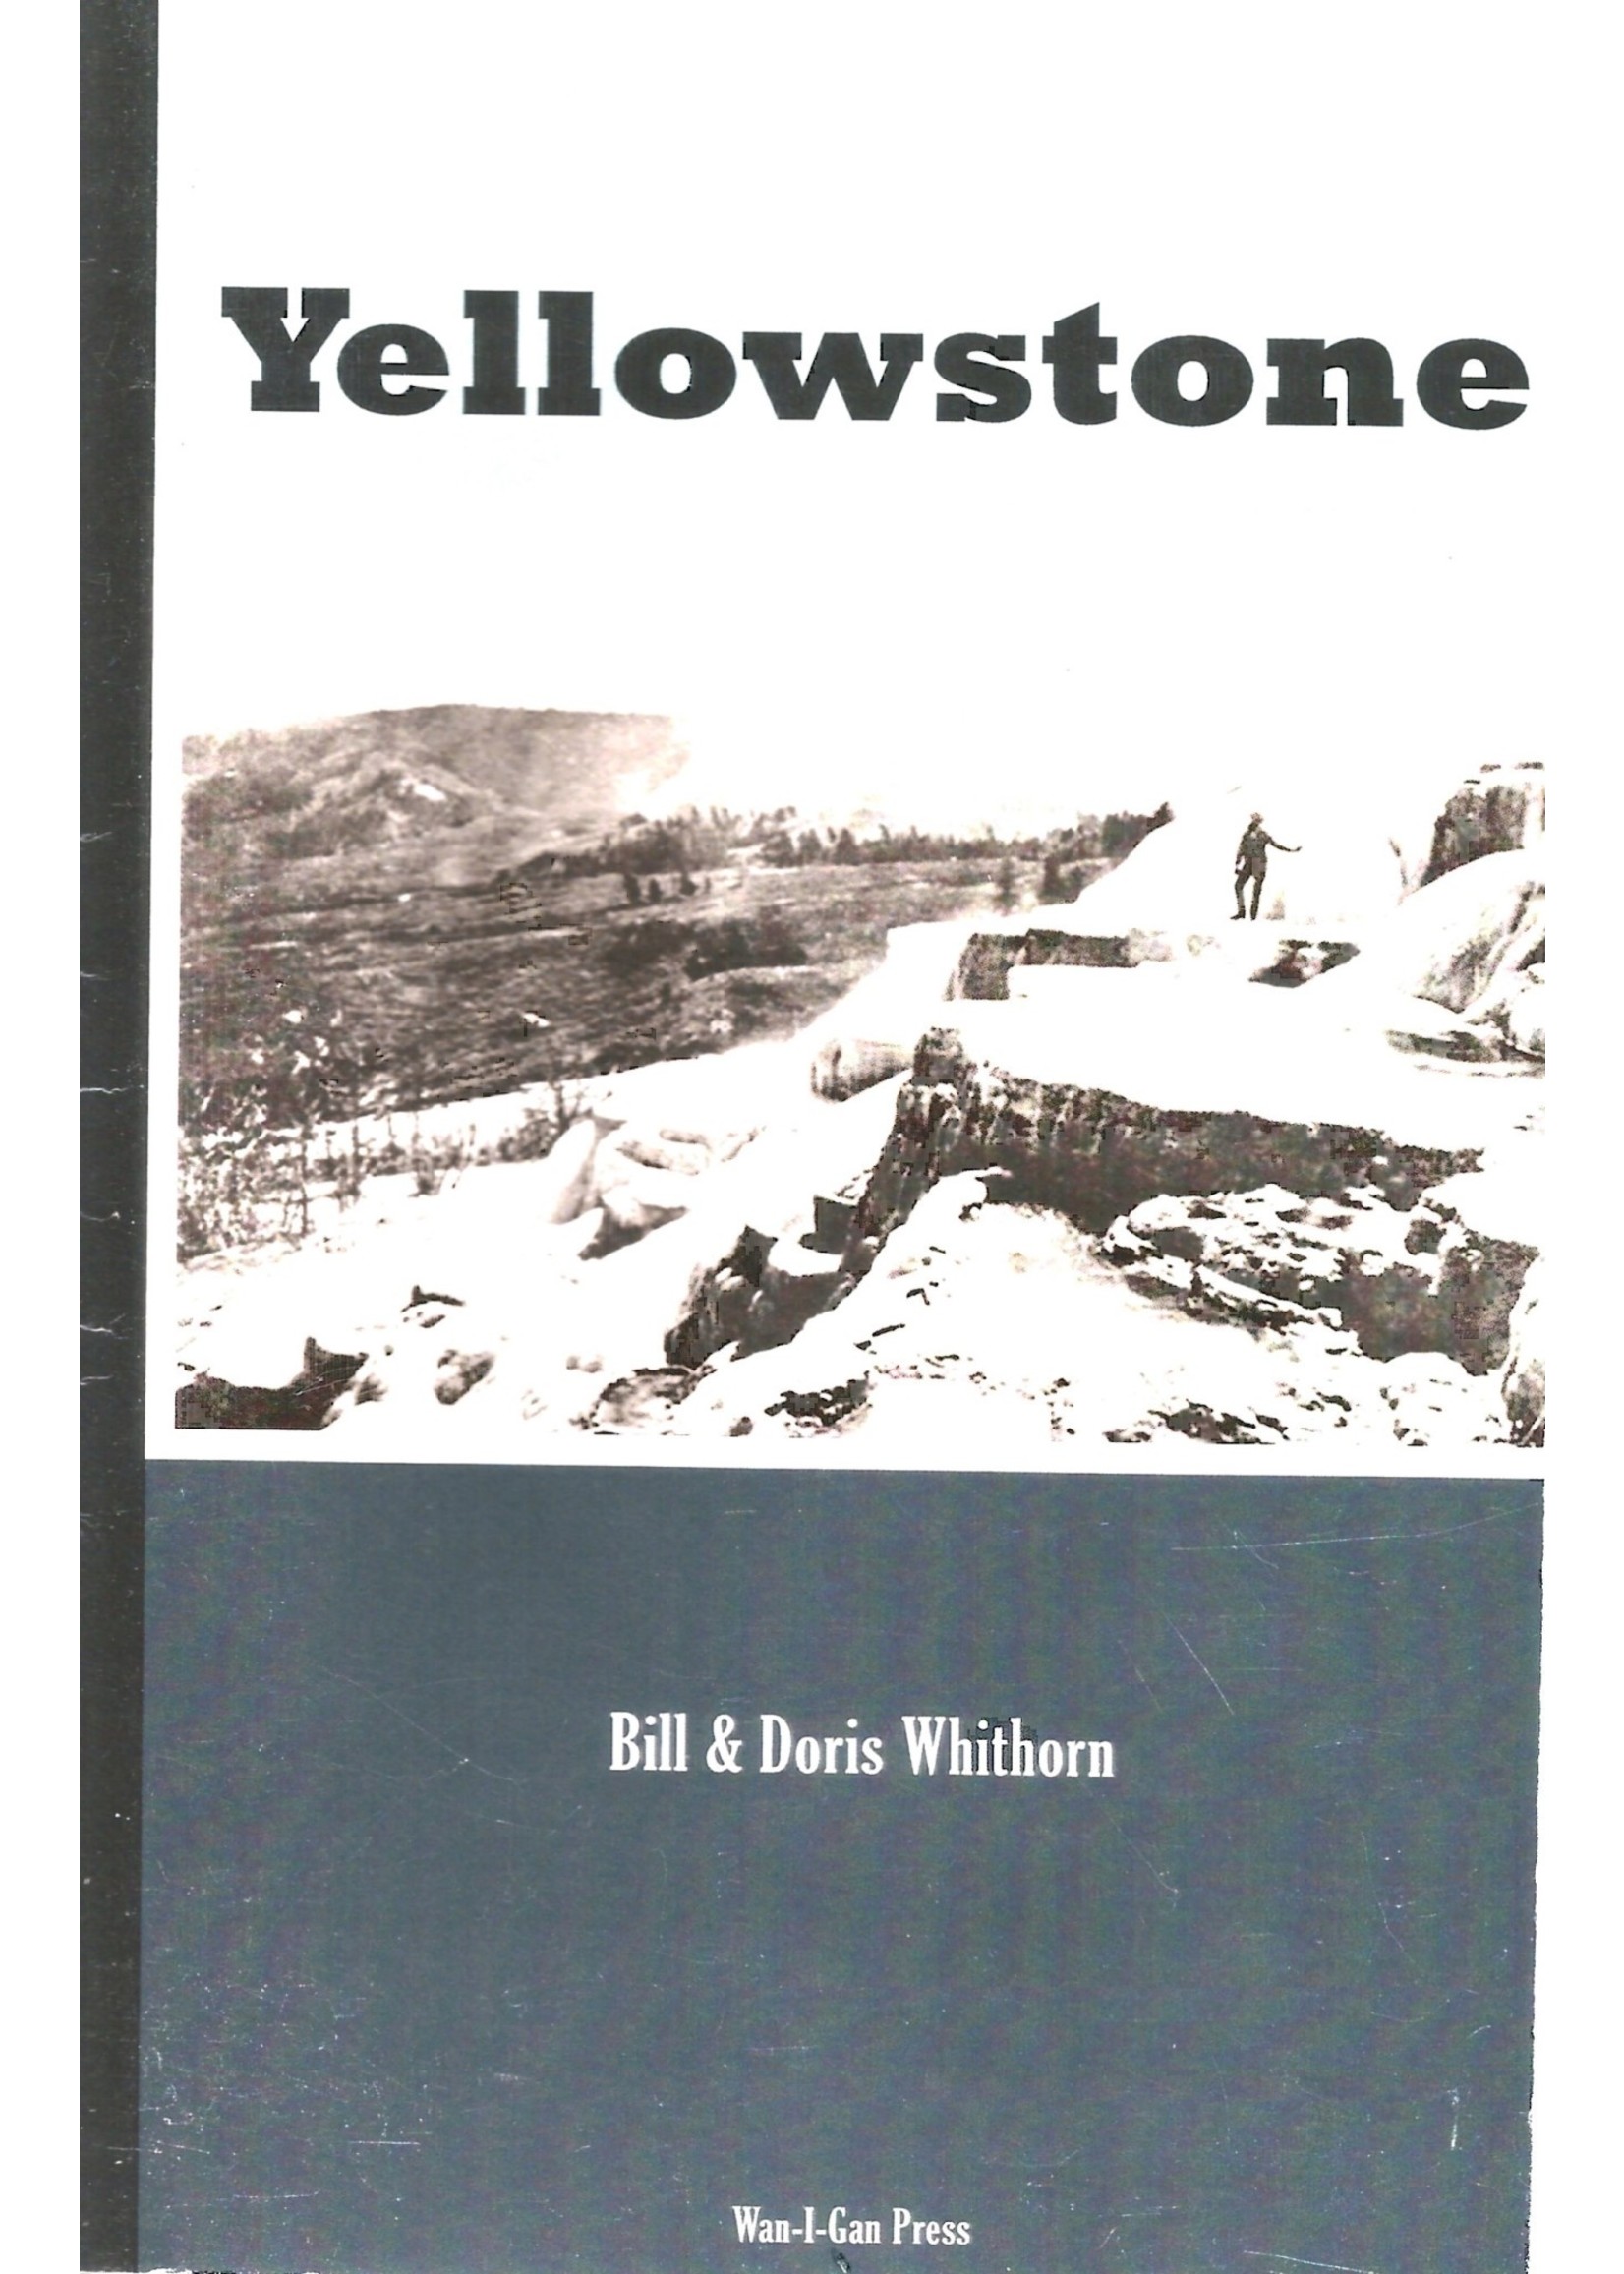 Wan-I-Gan Pics & Quotes of Yellowstone